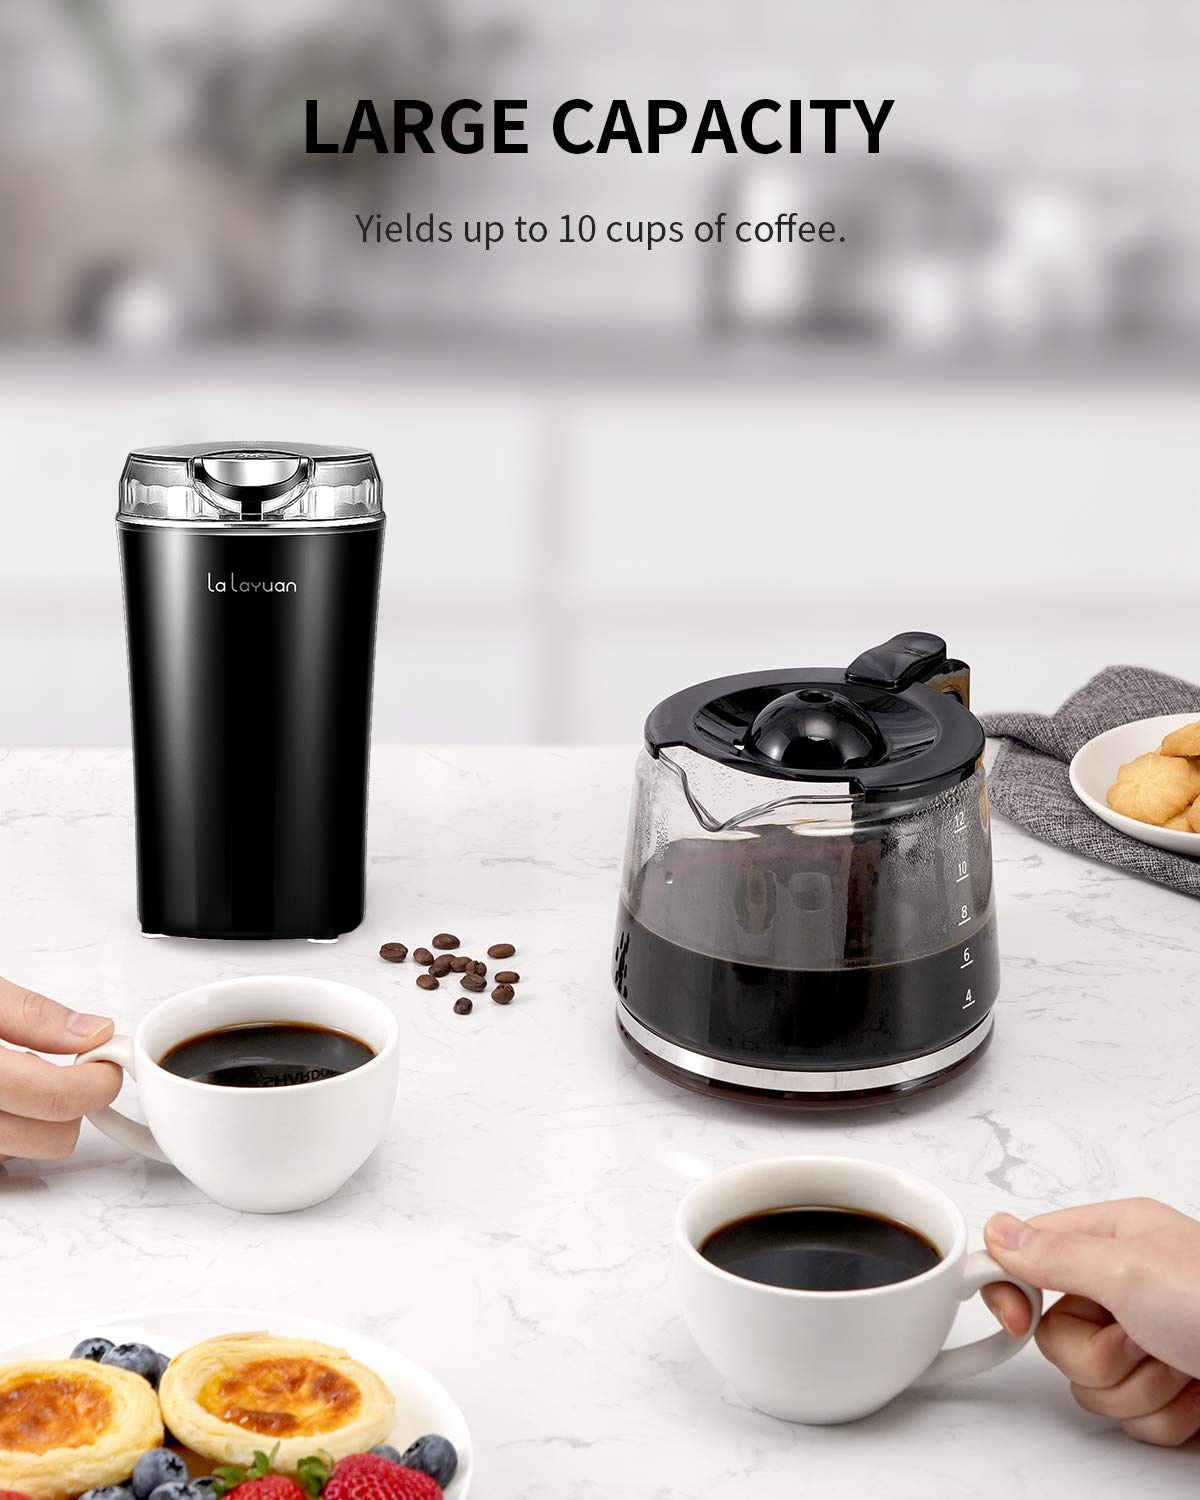 Espressione Rapid Touch Coffee Grinder - Black – The Seasoned Gourmet